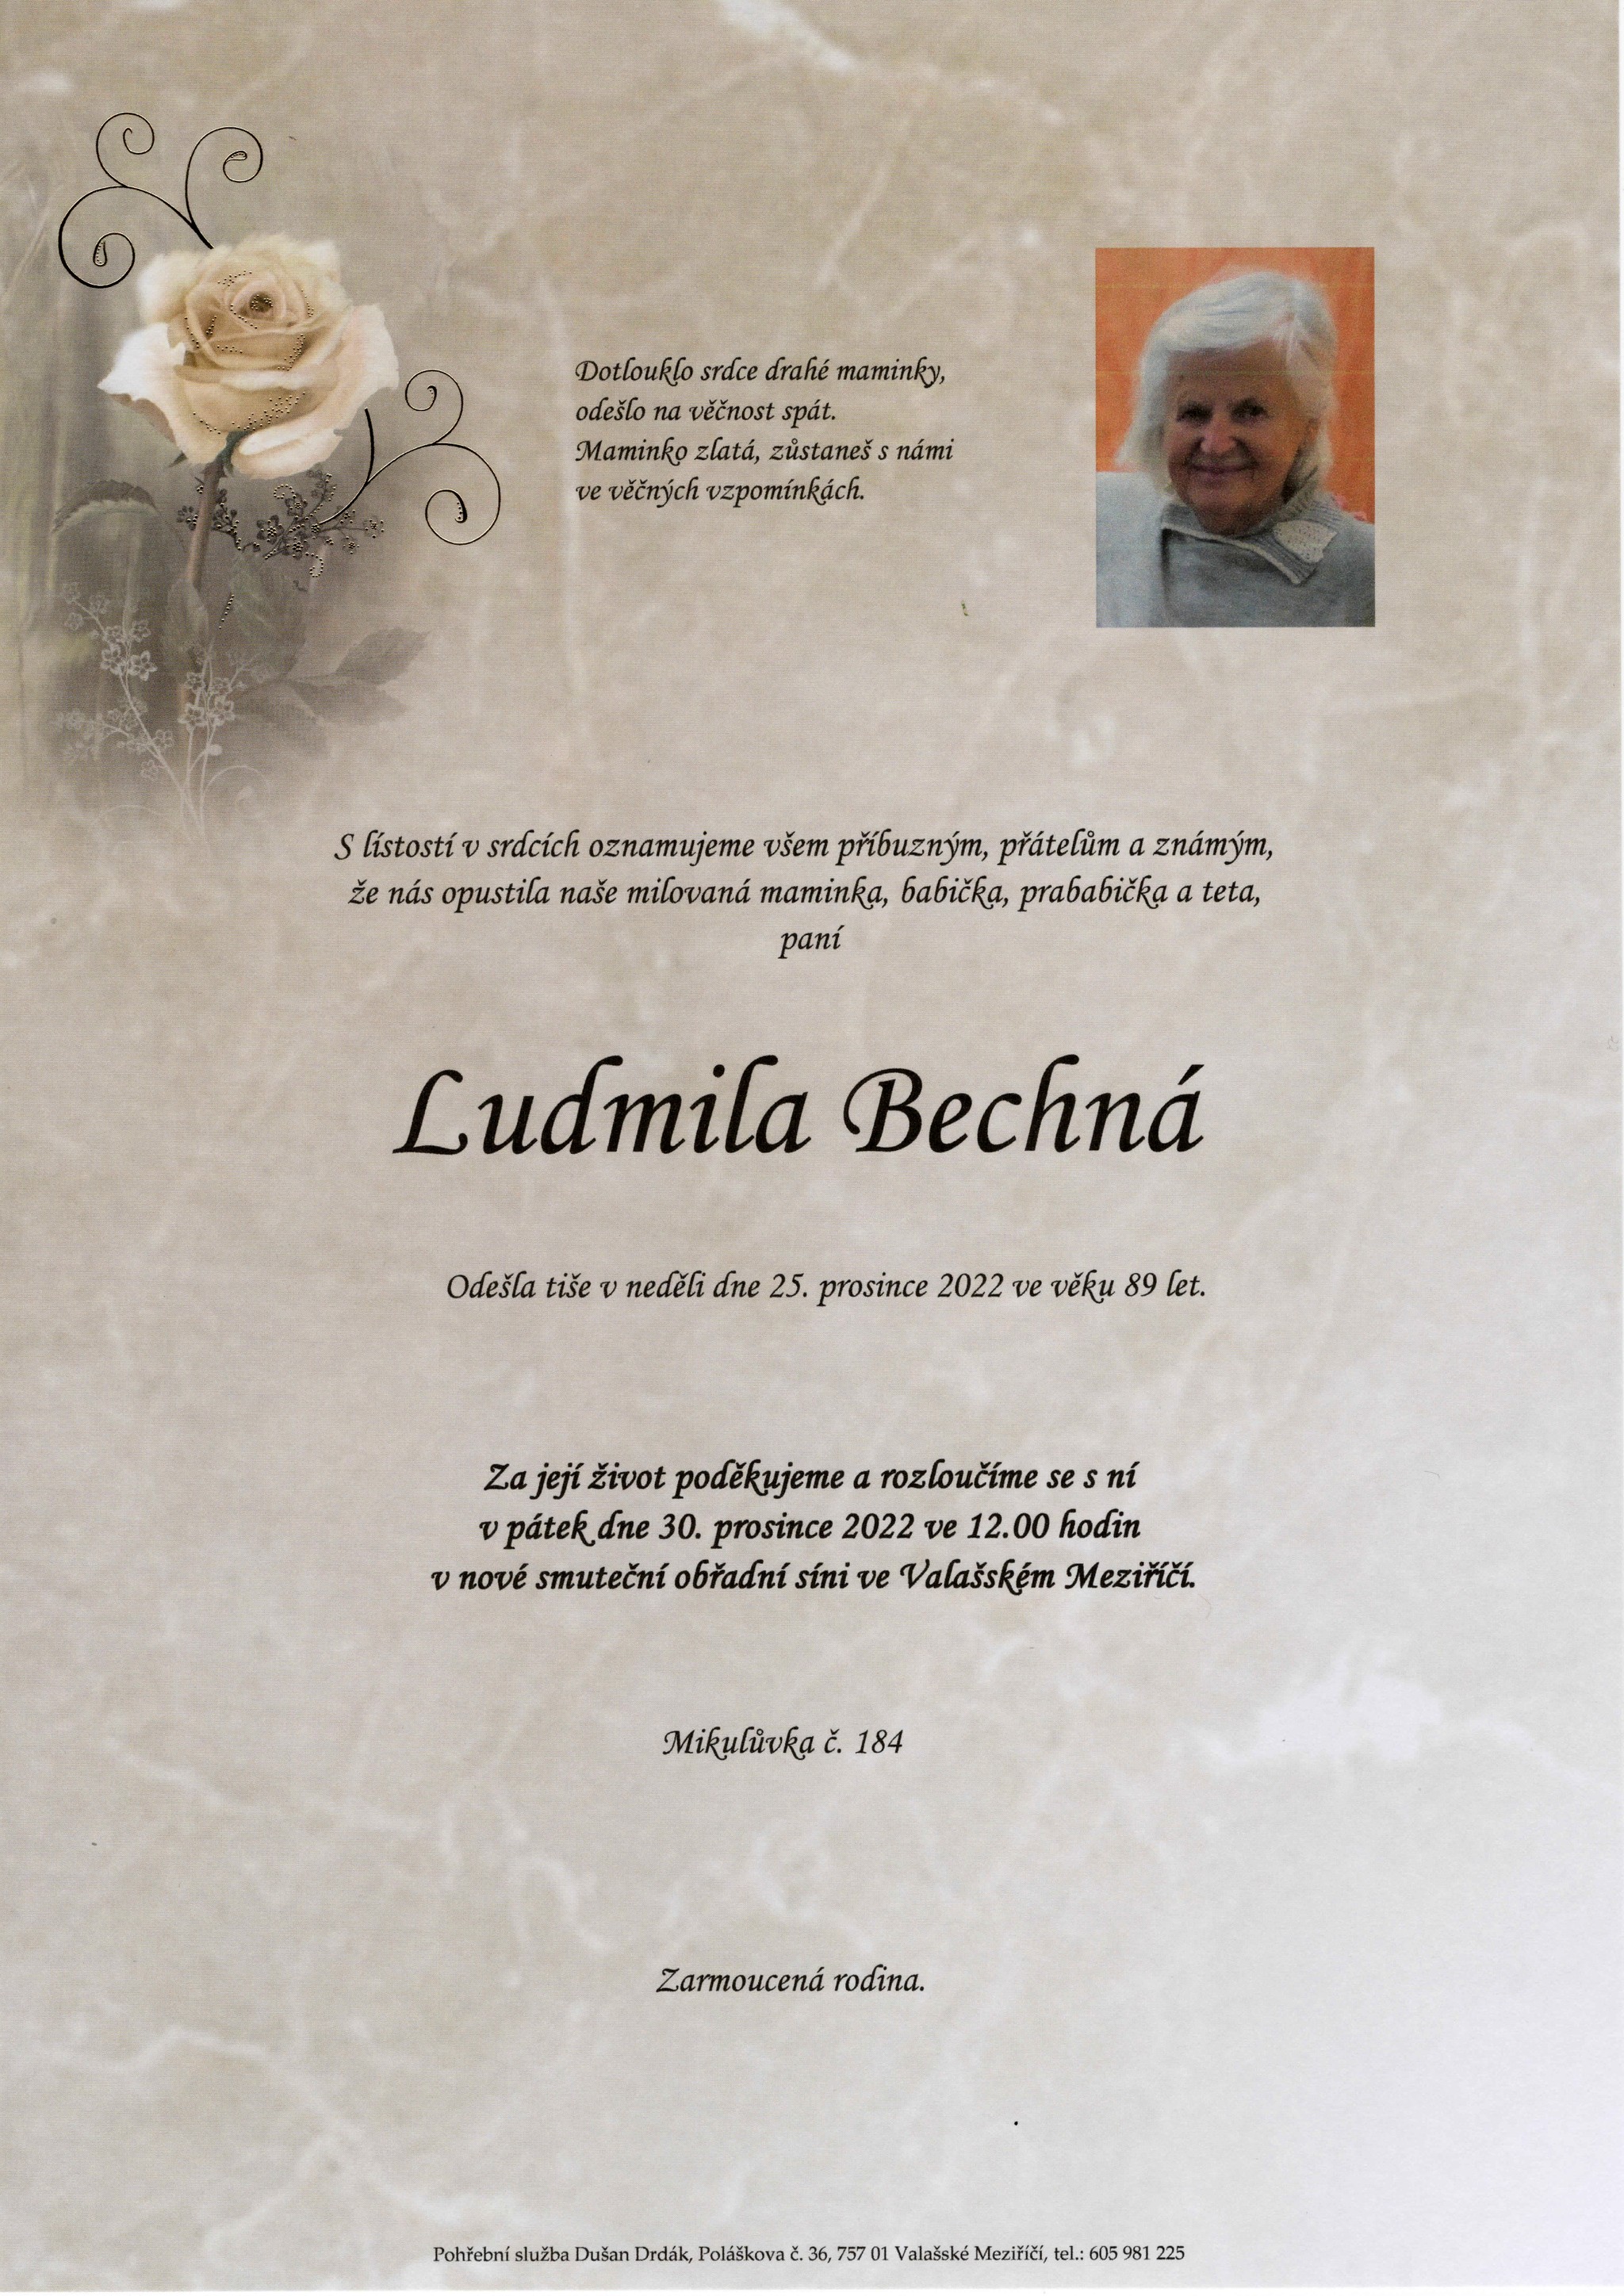 Ludmila Bechná